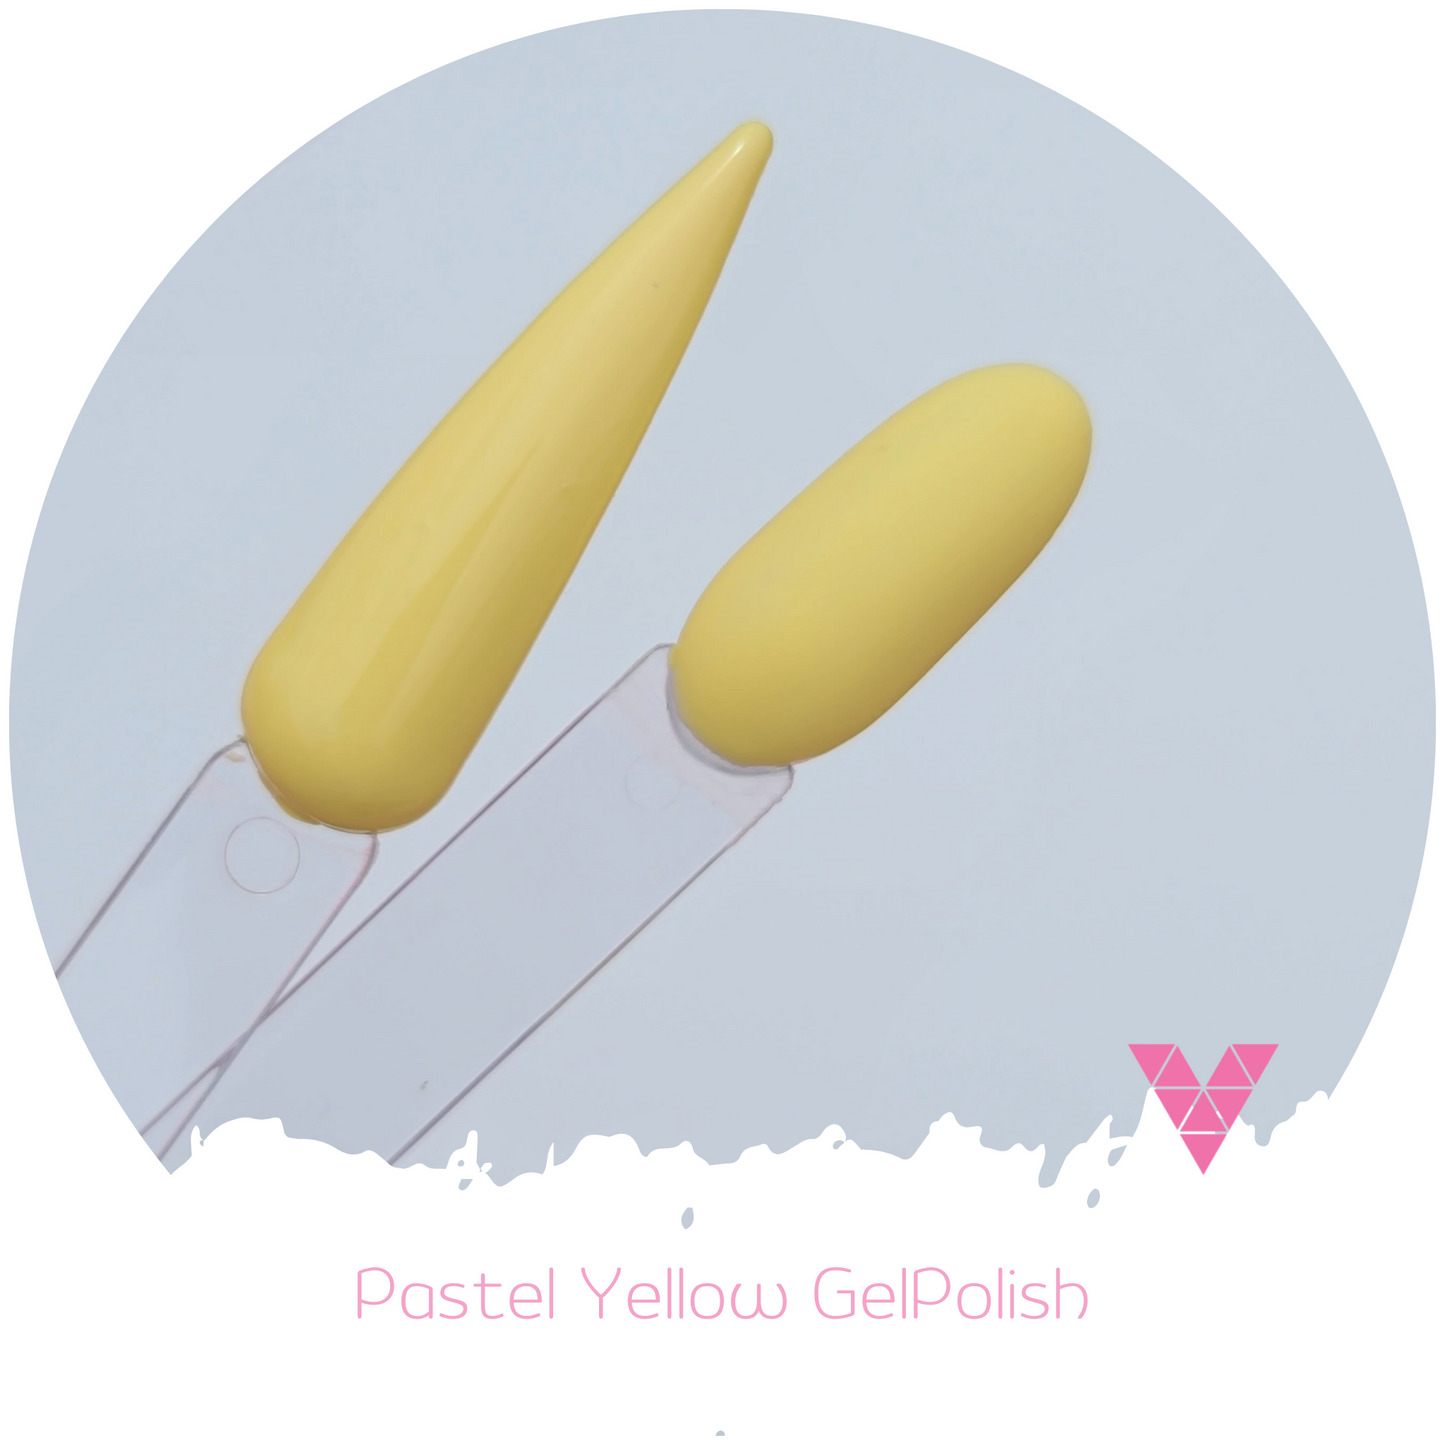 Pastel Yellow GelPolish